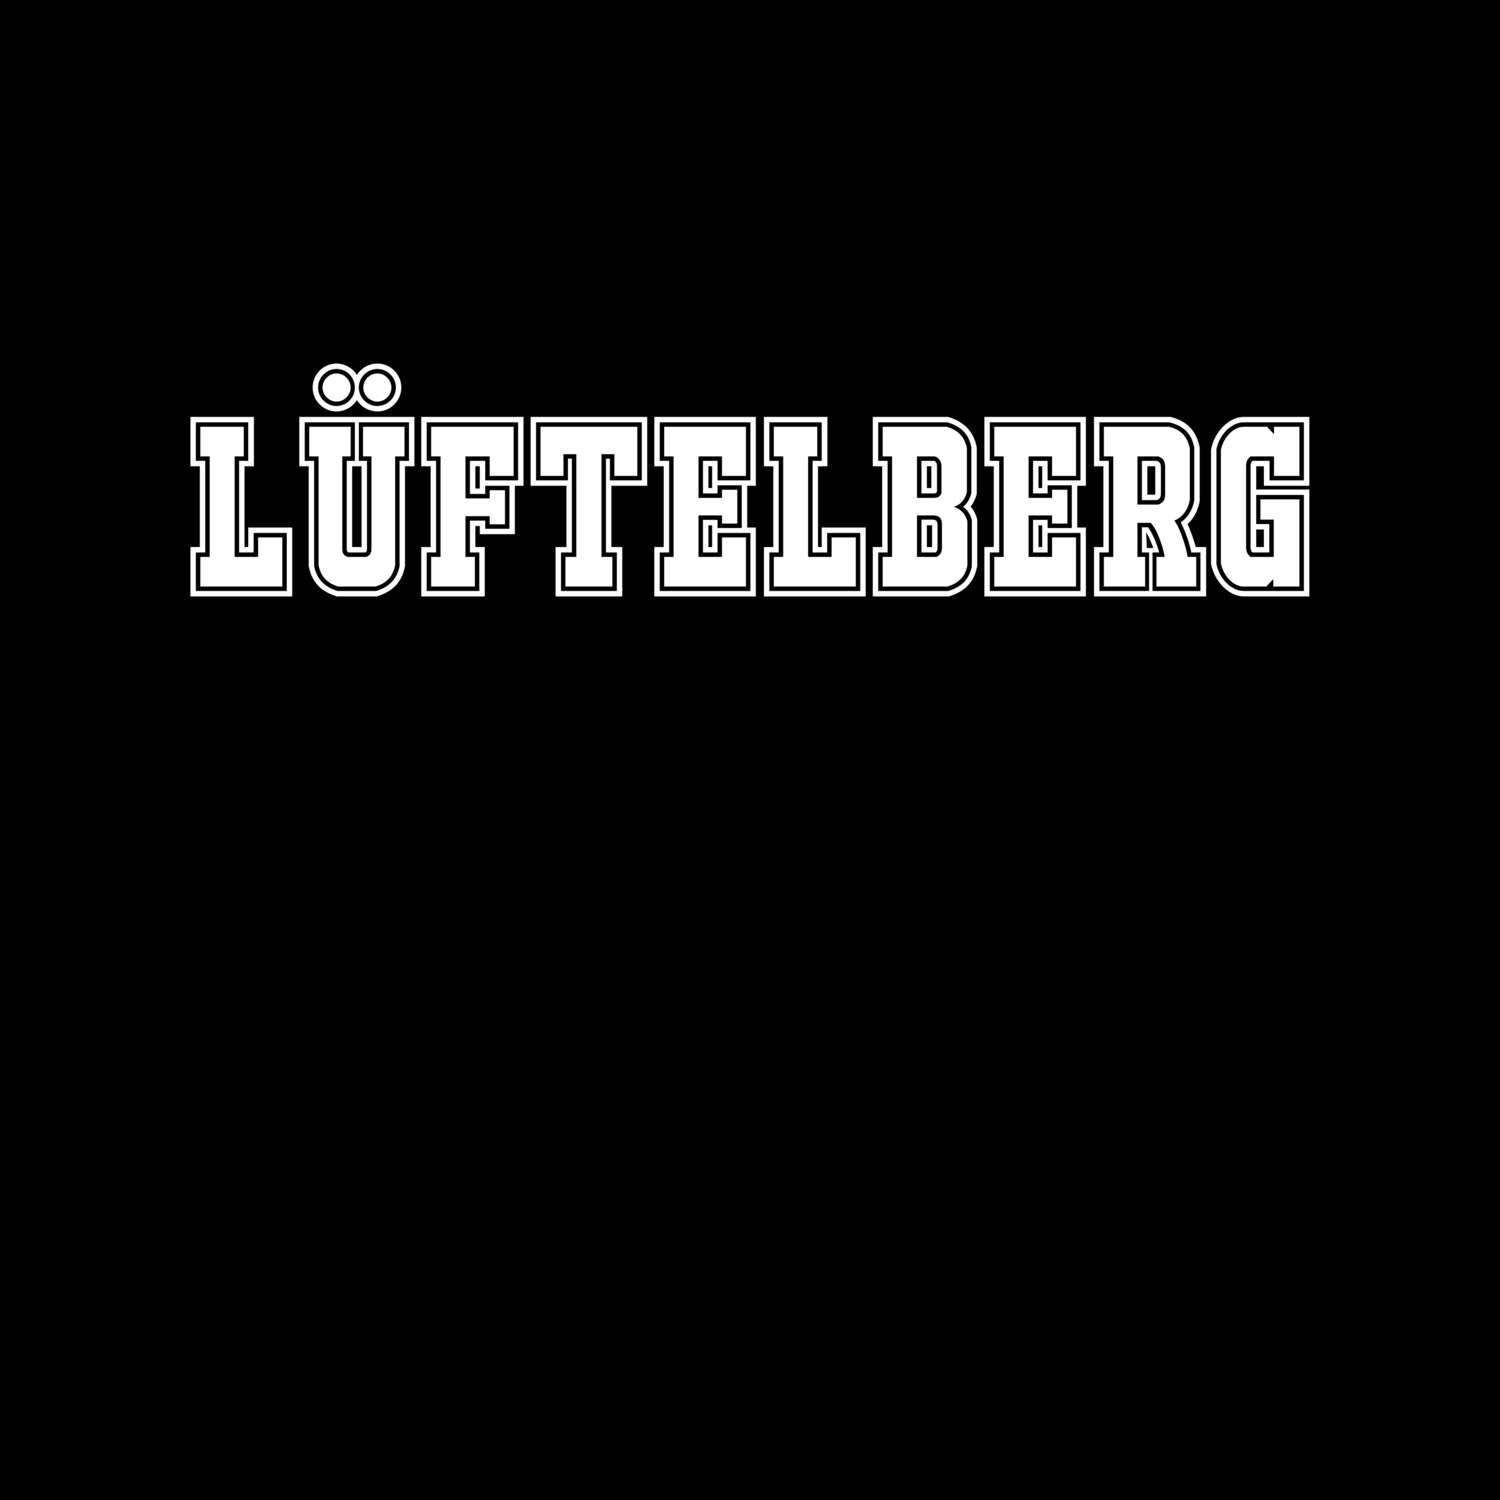 Lüftelberg T-Shirt »Classic«